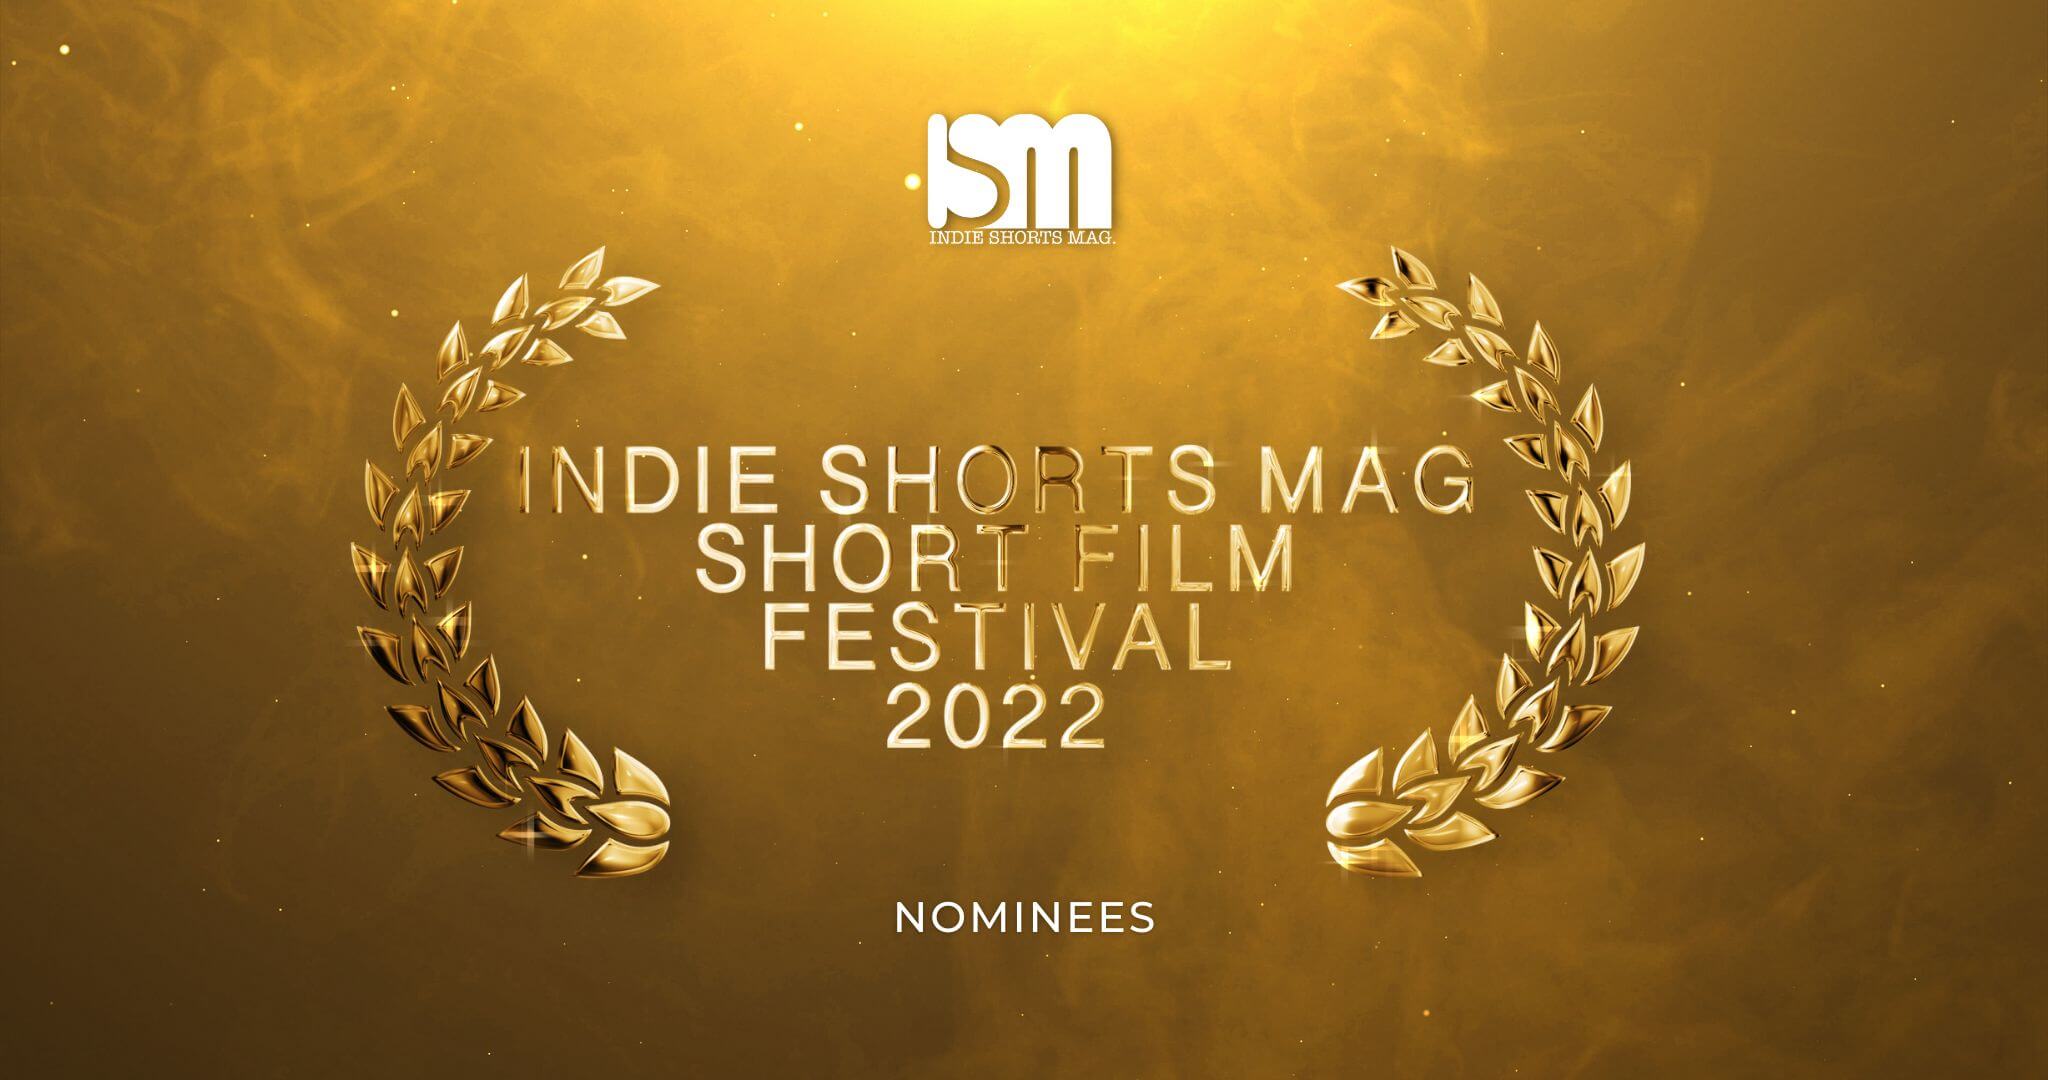 Indie Shorts Mag Short Film Festival 2022 - Nominees Post